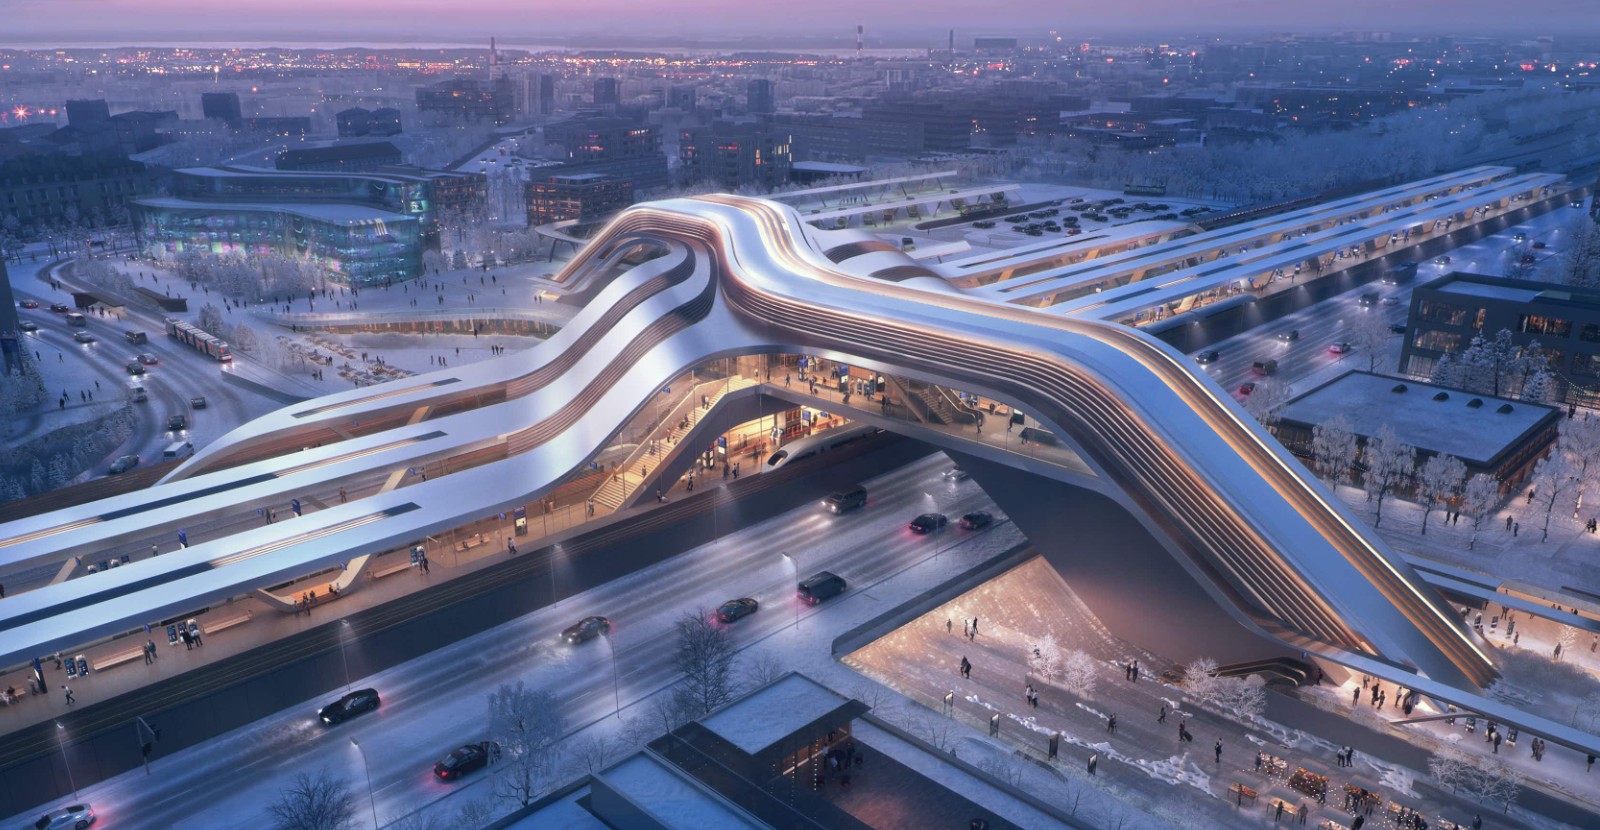 Tallinn’s railway station project by Zaha Hadid Architects